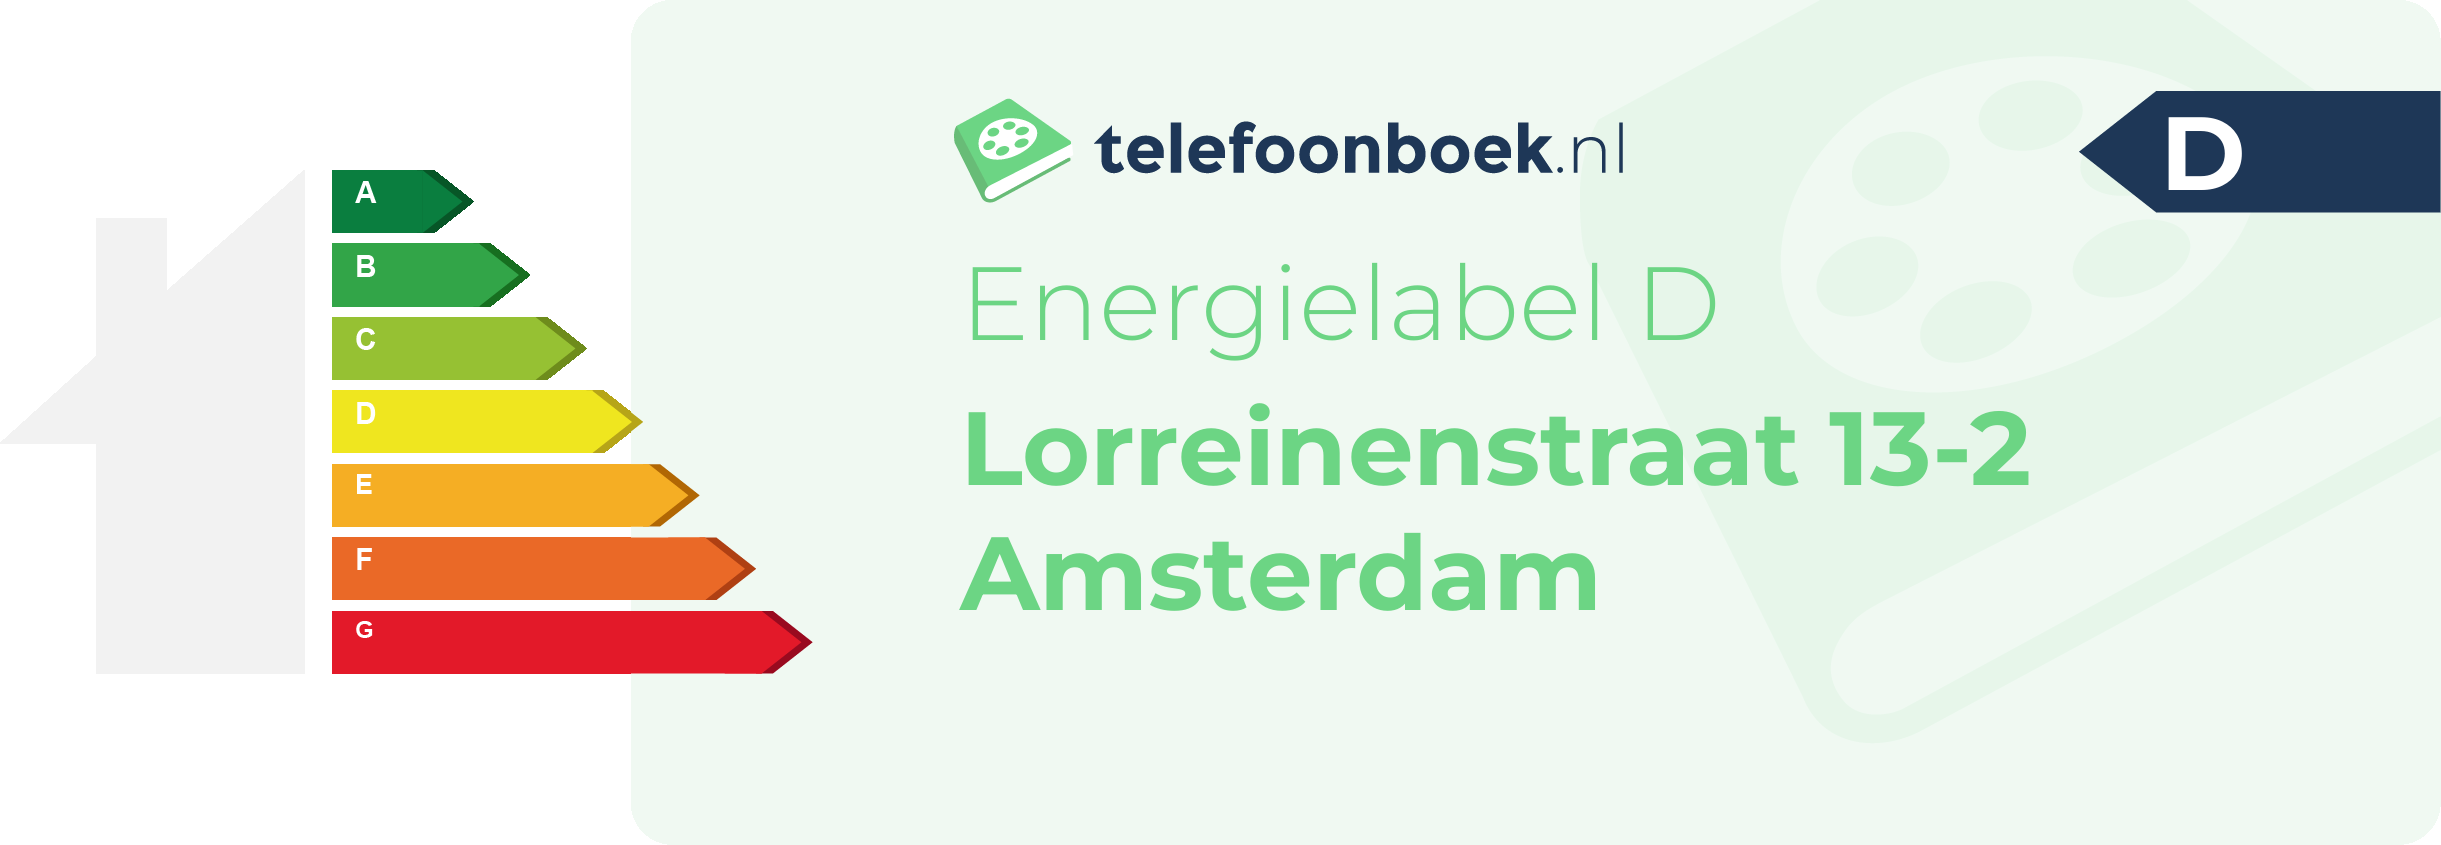 Energielabel Lorreinenstraat 13-2 Amsterdam